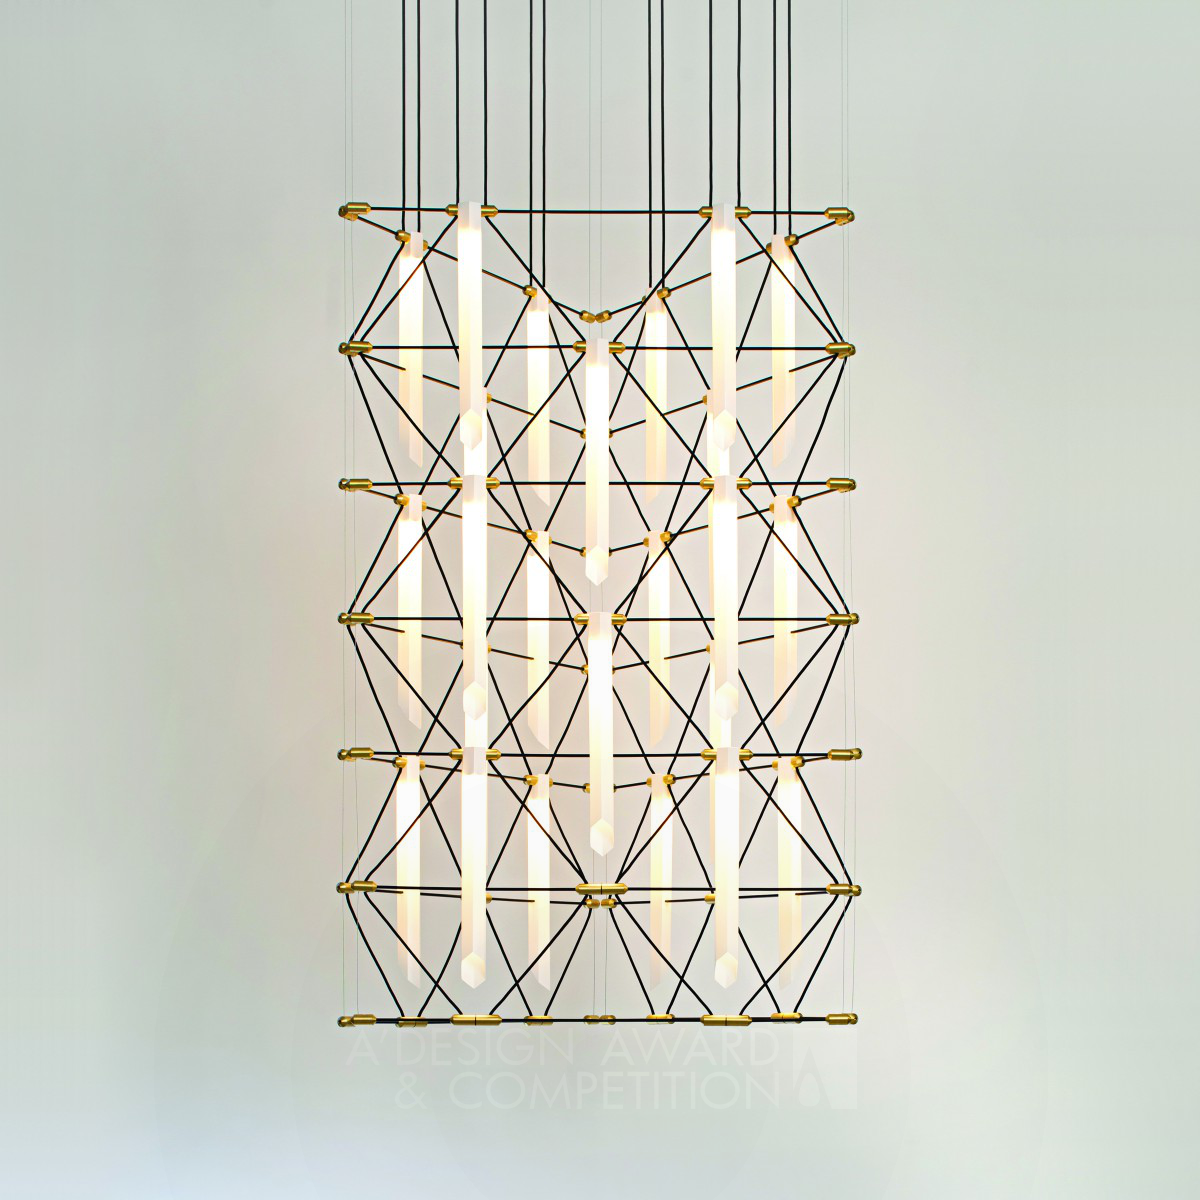 Mozaik system Modulable lamp by Davide Oppizzi